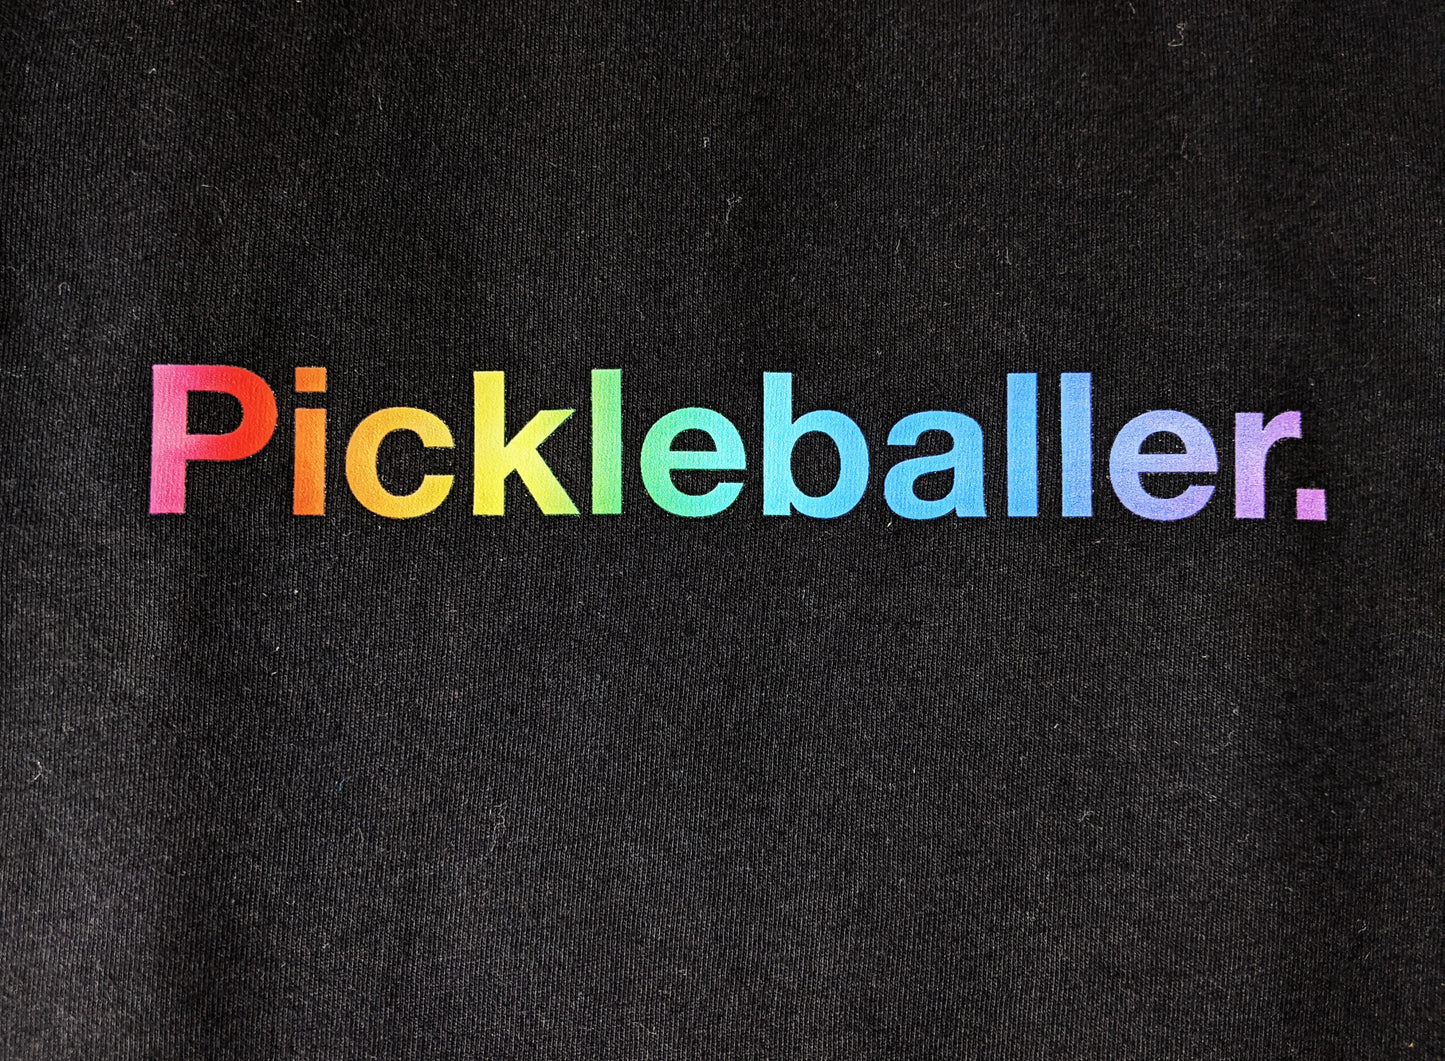 Pickleballer Rainbow Spectrum Long-Sleeve T-shirt - Women's